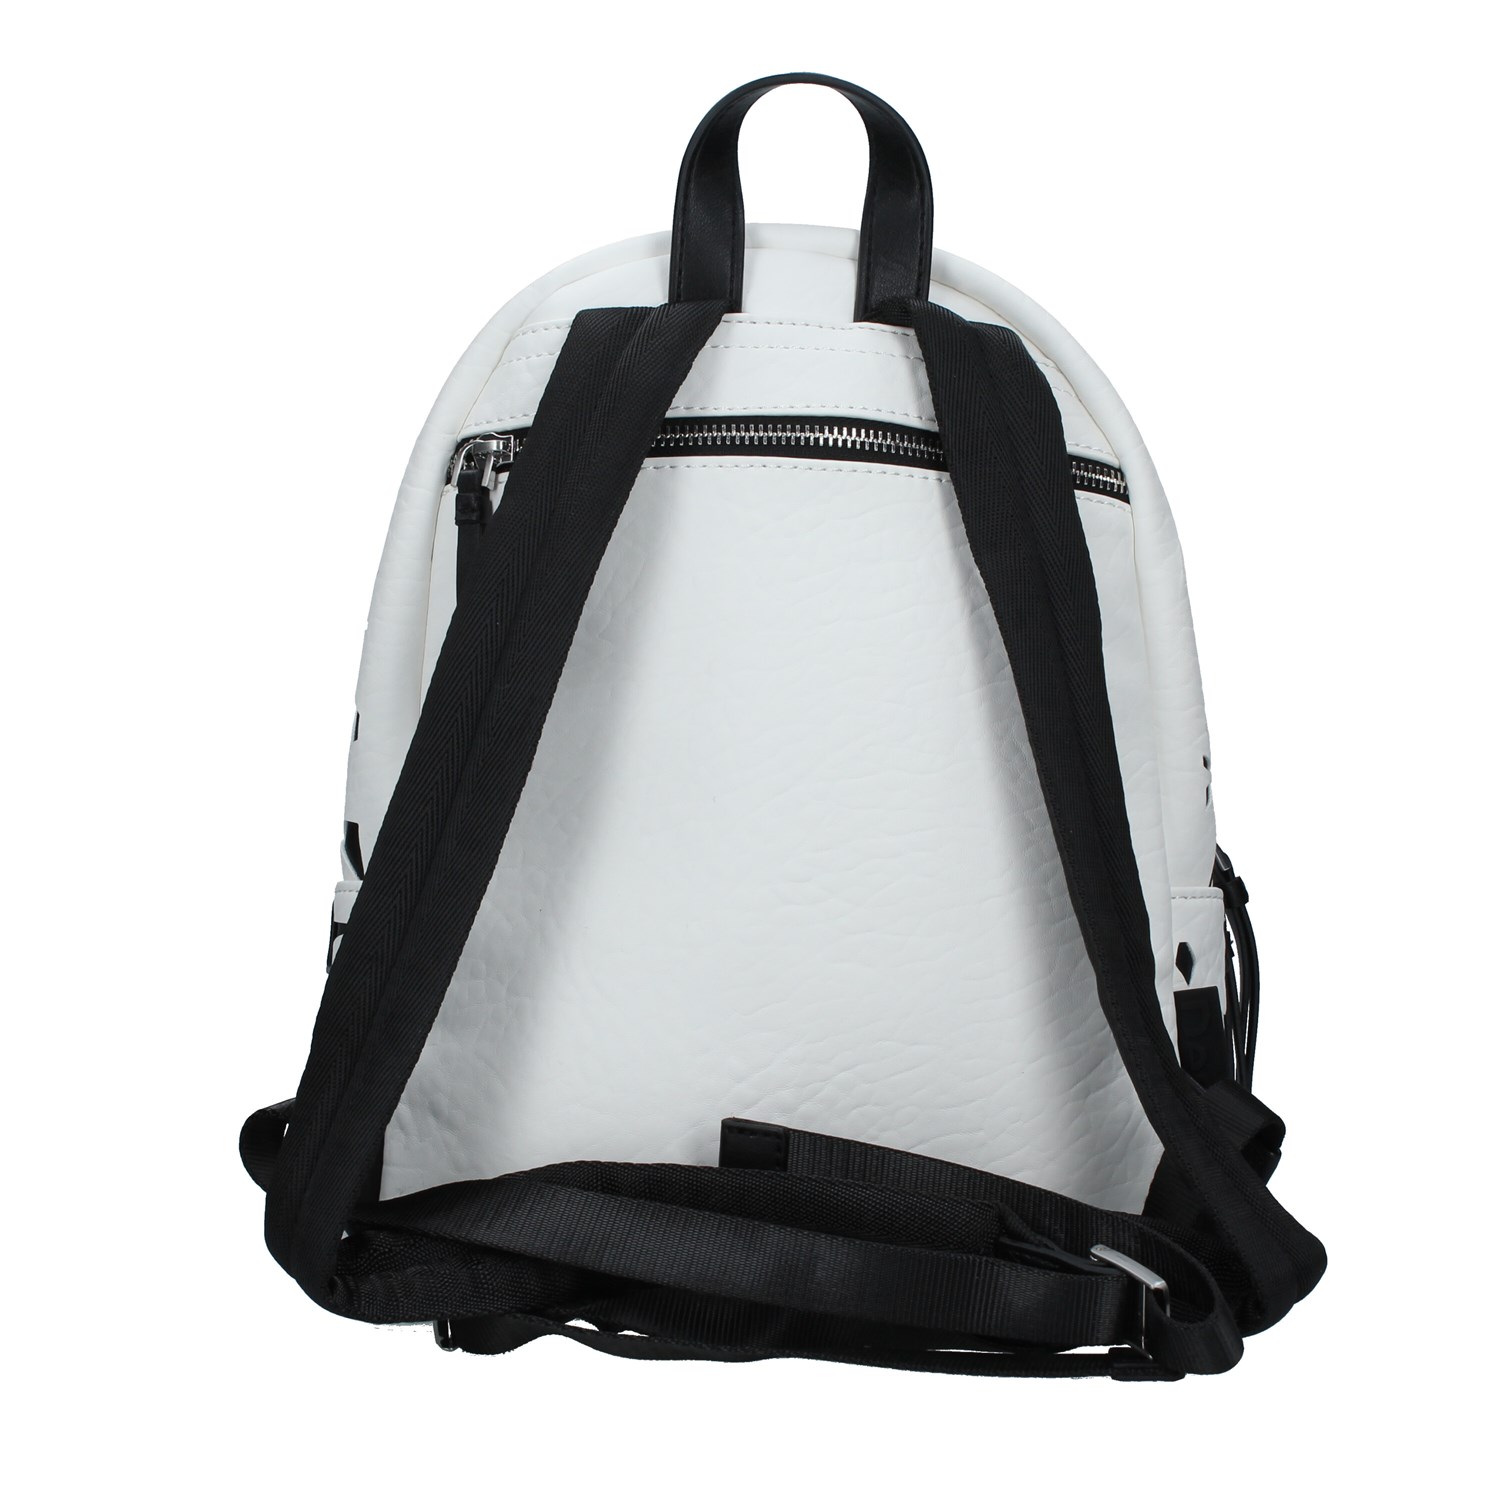 Desigual Bags Accessories Backpacks WHITE 23SAKP23